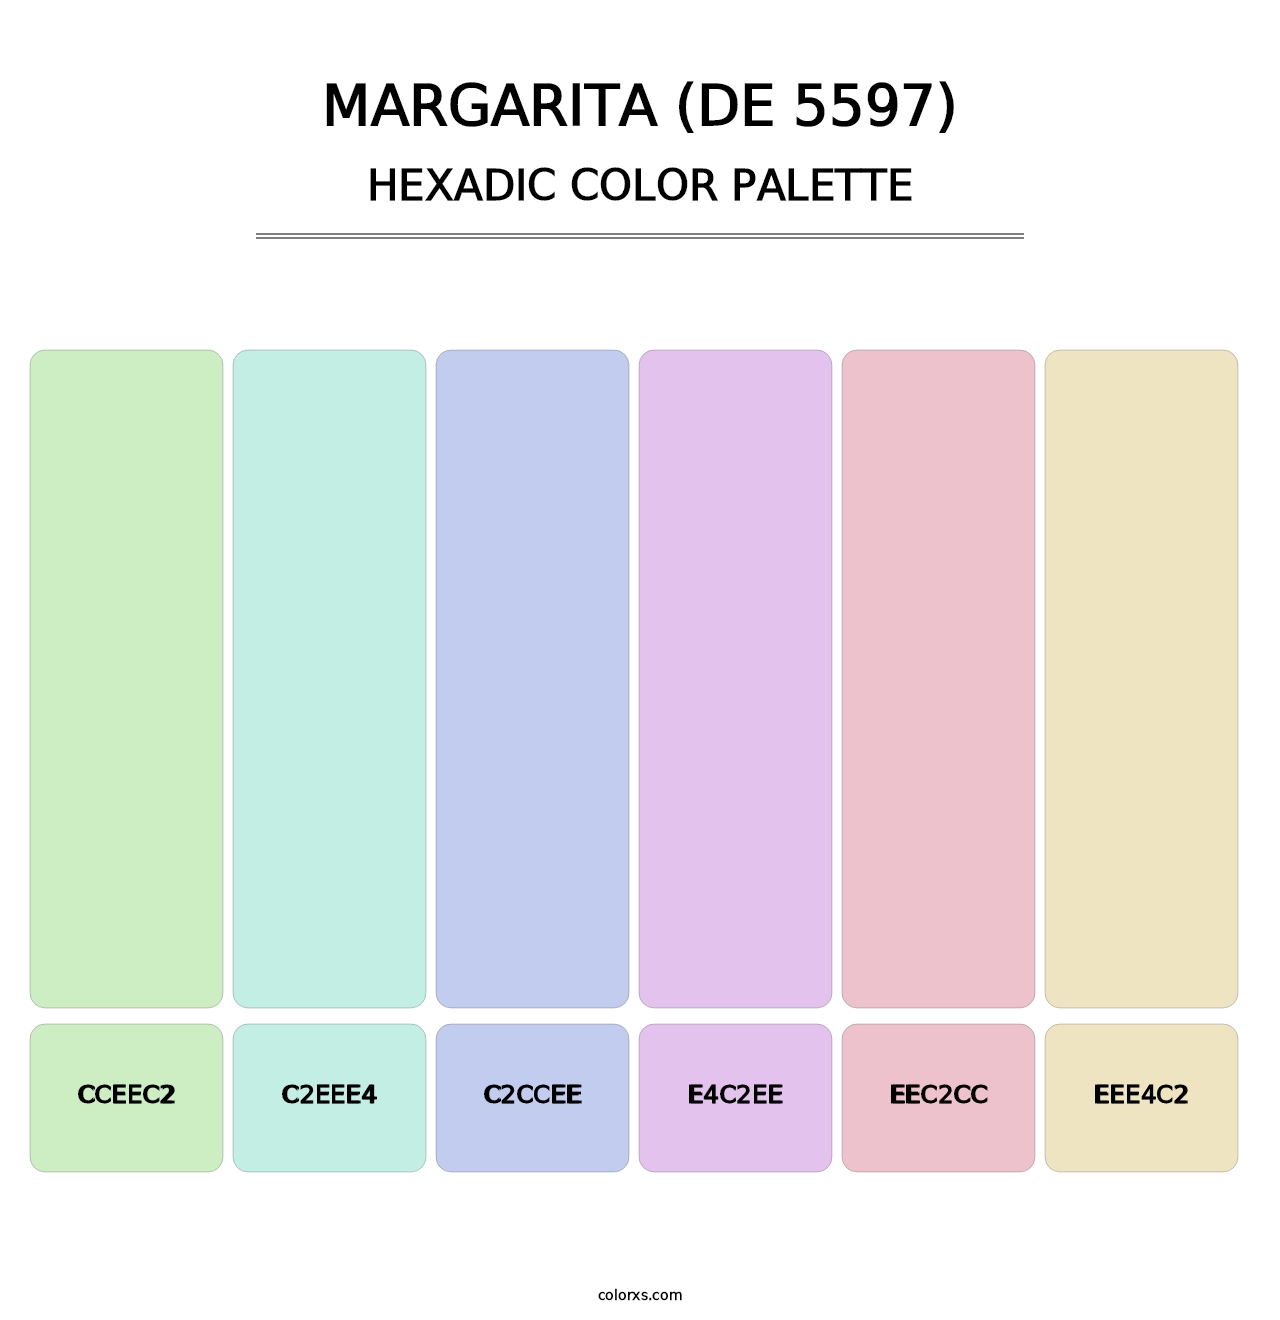 Margarita (DE 5597) - Hexadic Color Palette